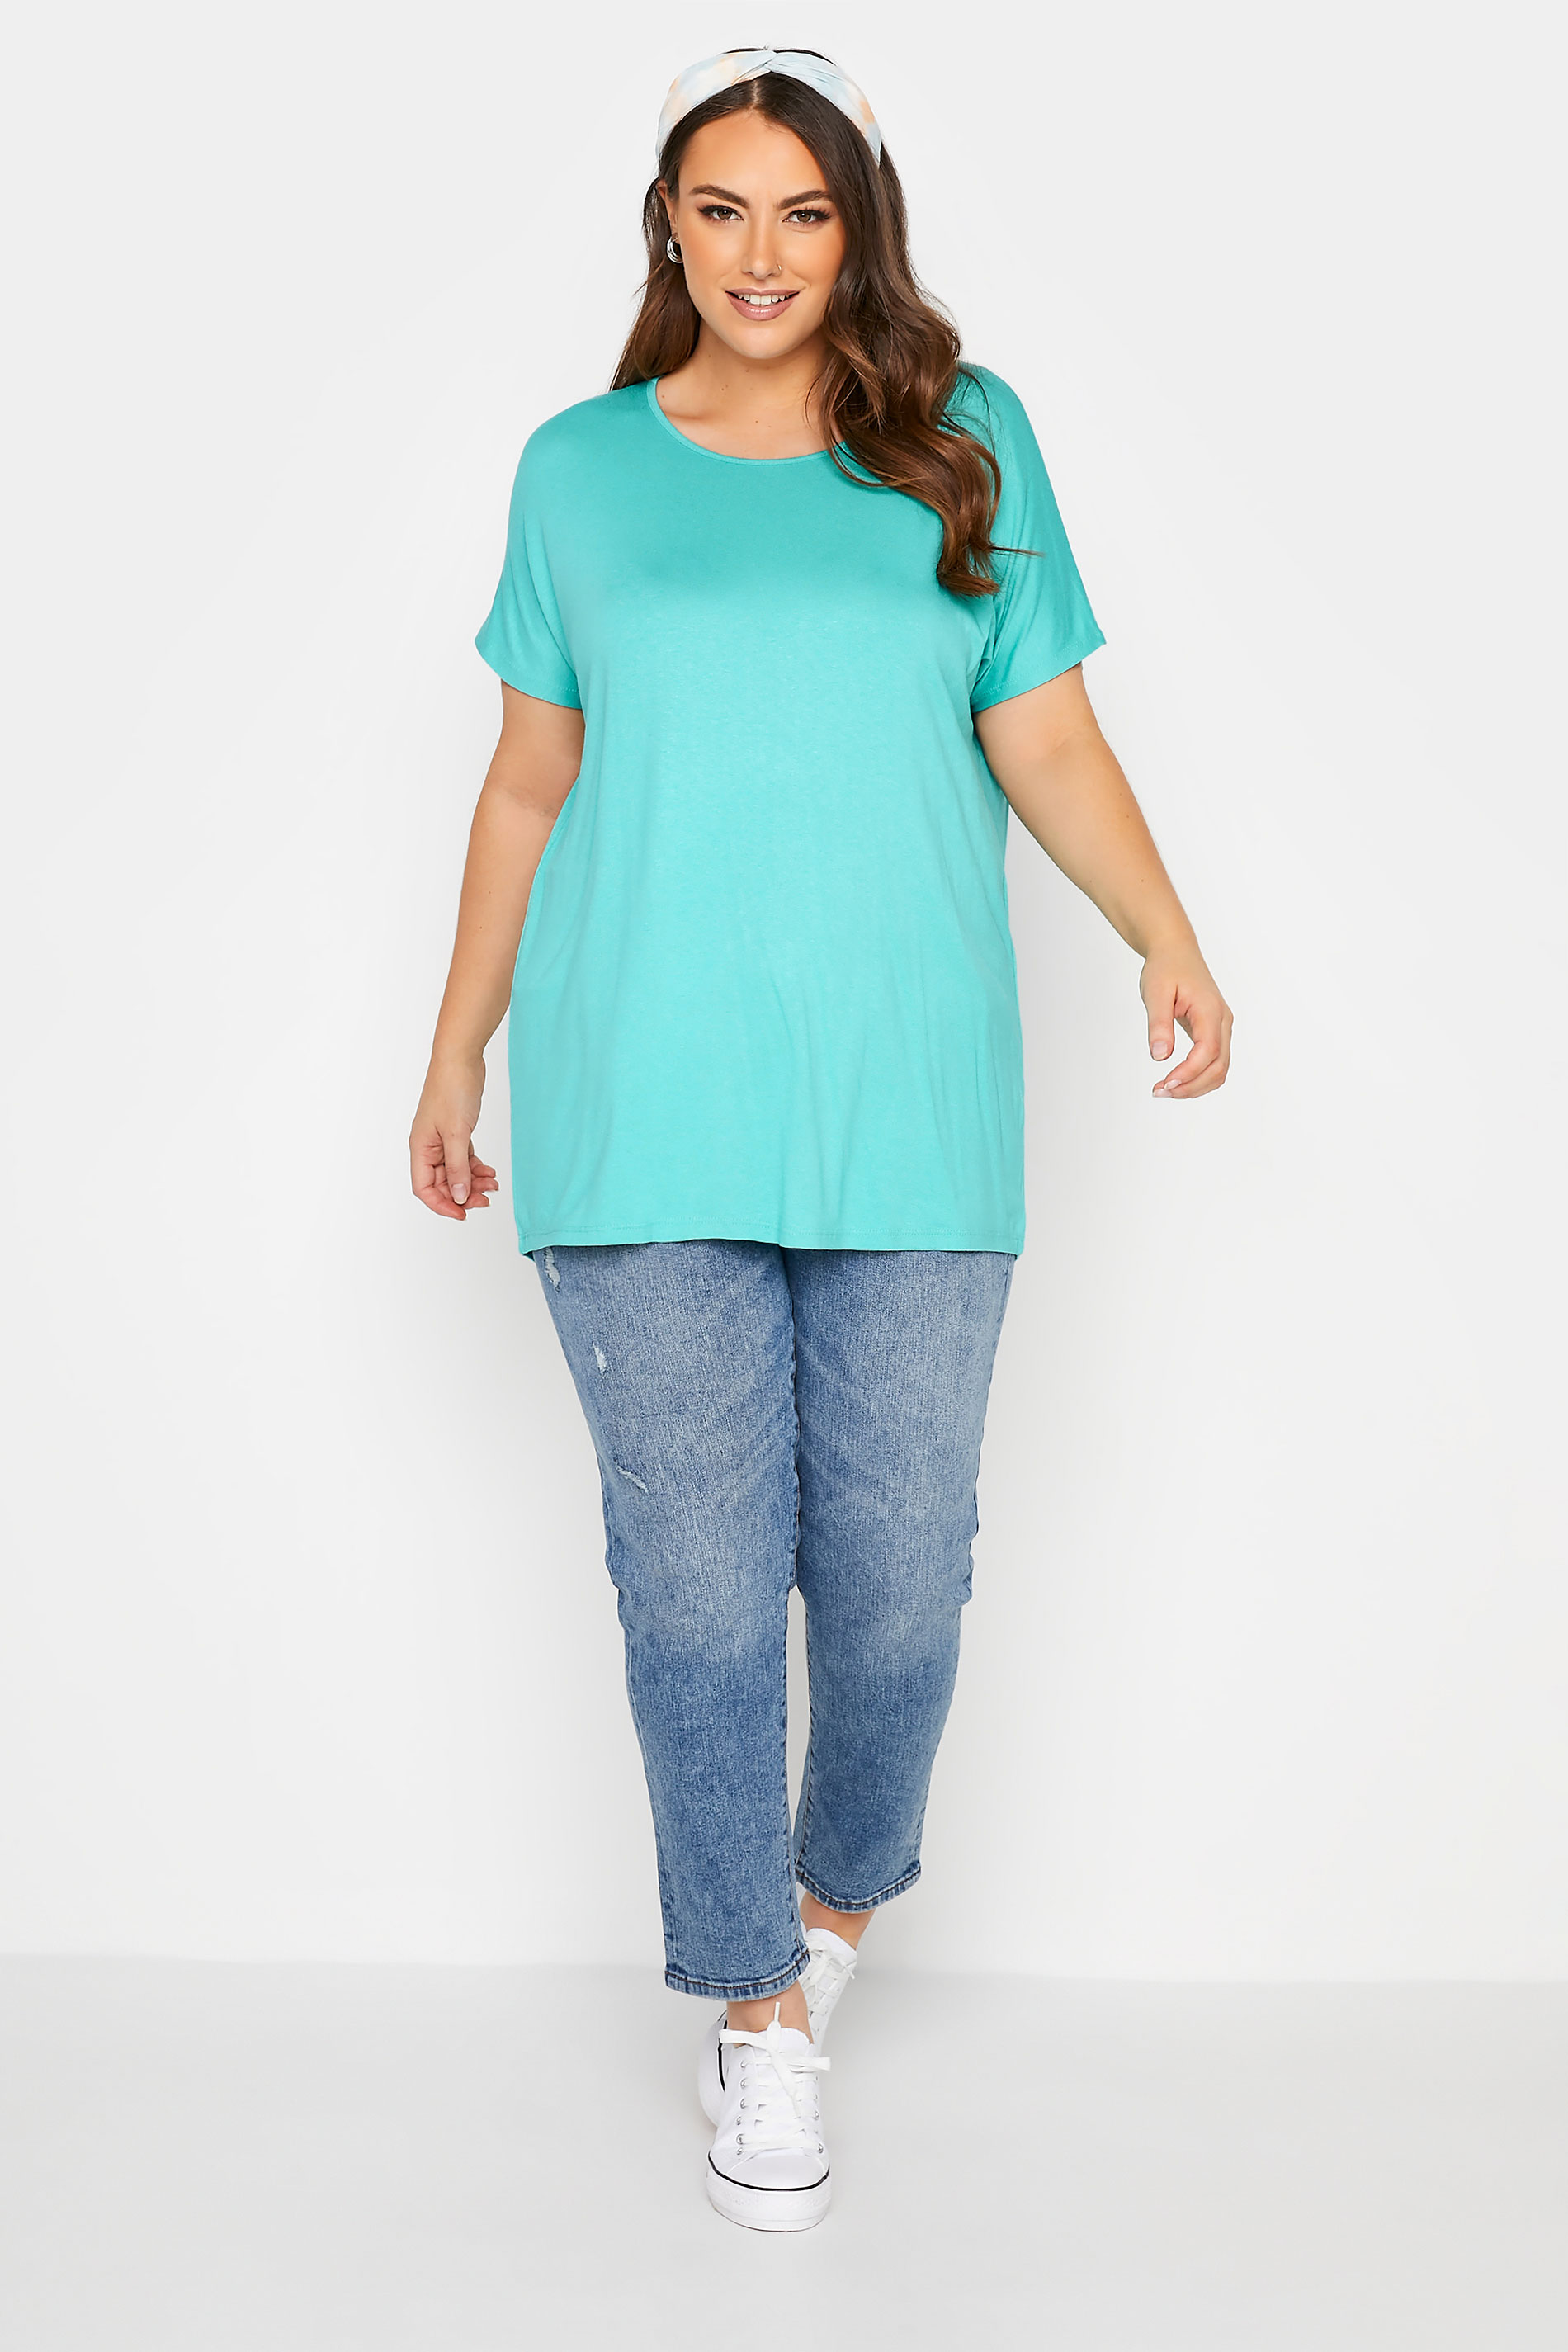 Grande taille  Tops Grande taille  T-Shirts | T-Shirt Bleu Turquoise Manches Courtes en Jersey - KS82214